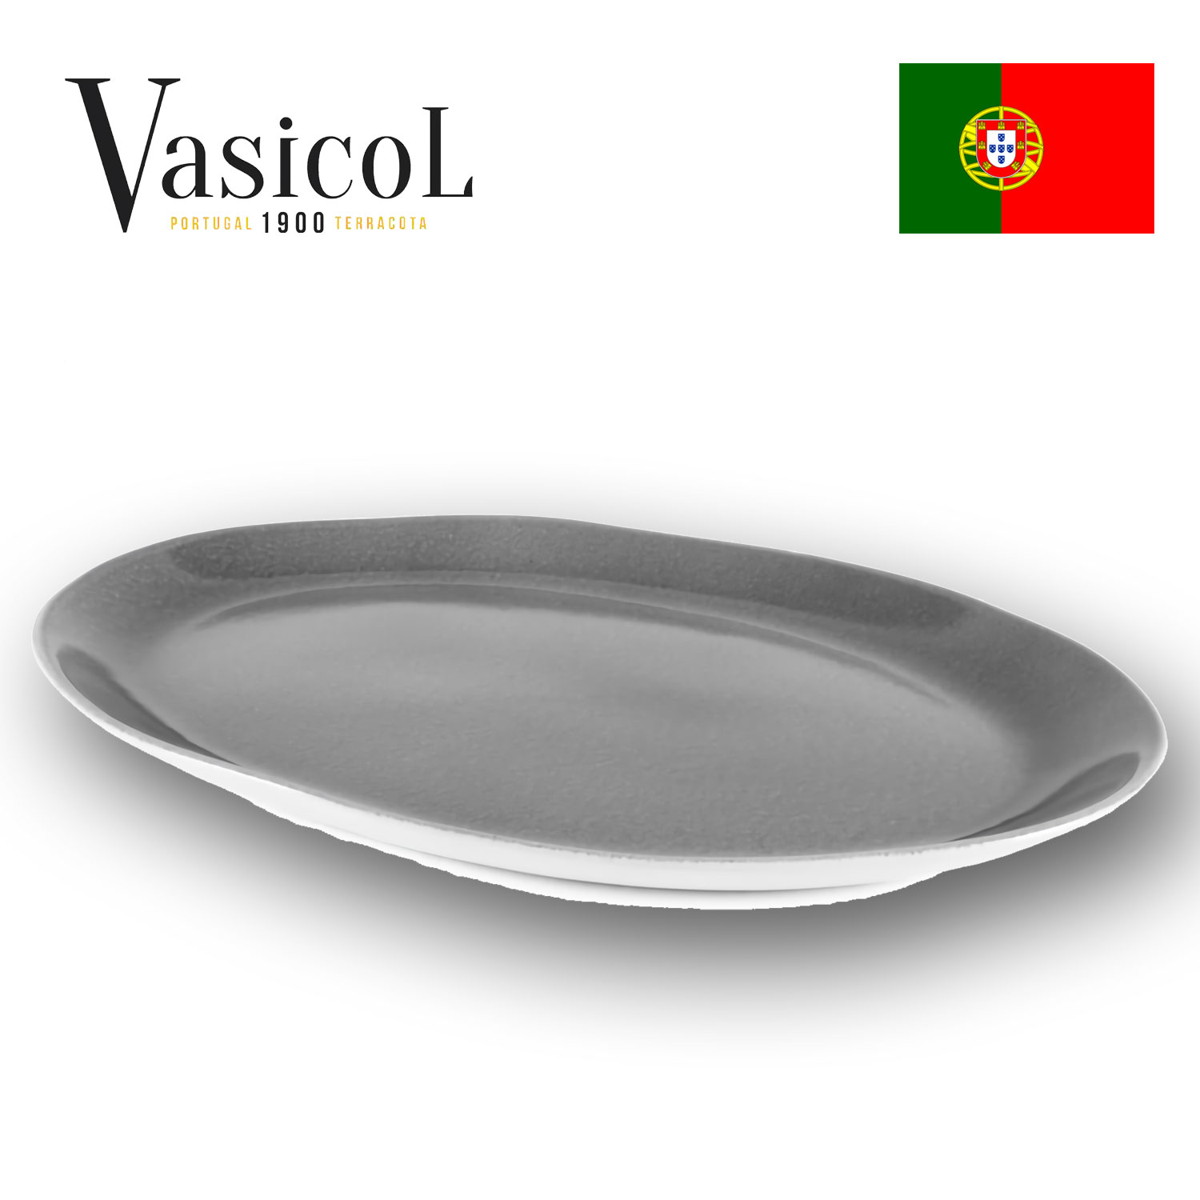 MARIA スモールオーバルトレイ プレーン 皿 食器 ポルトガル製 テラコッタ 陶器